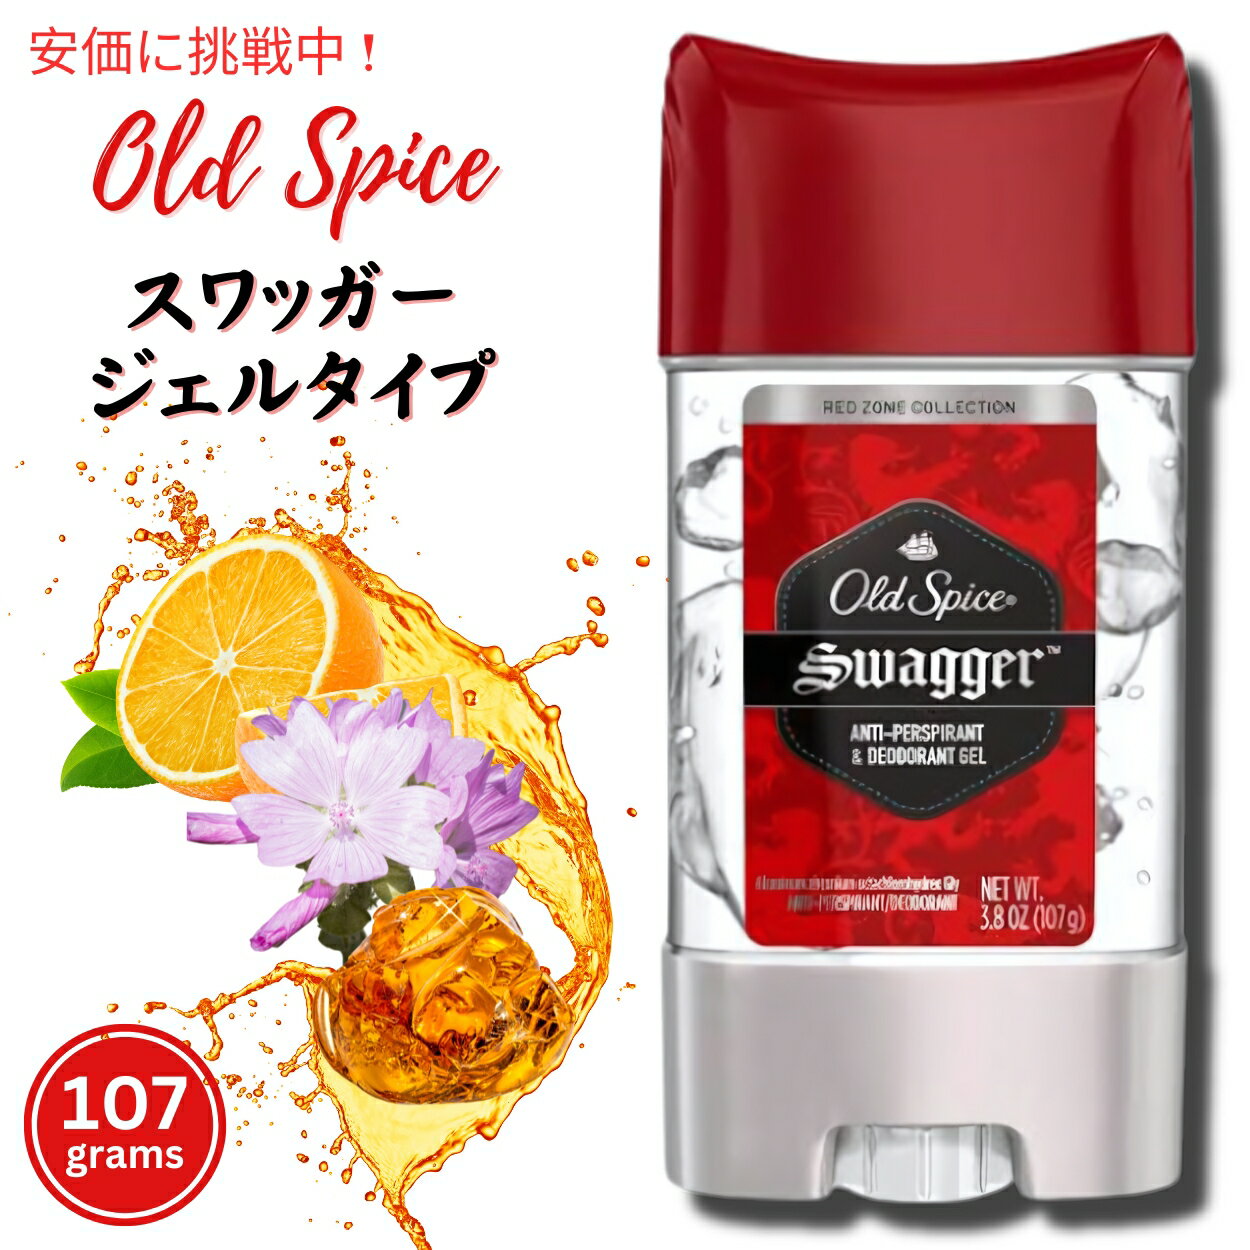 Old Spice オールドスパイス ジェルタイプ デオドラント 107g スワッガー Red Zone GEL Deodorant Swagger Scent 3.8oz